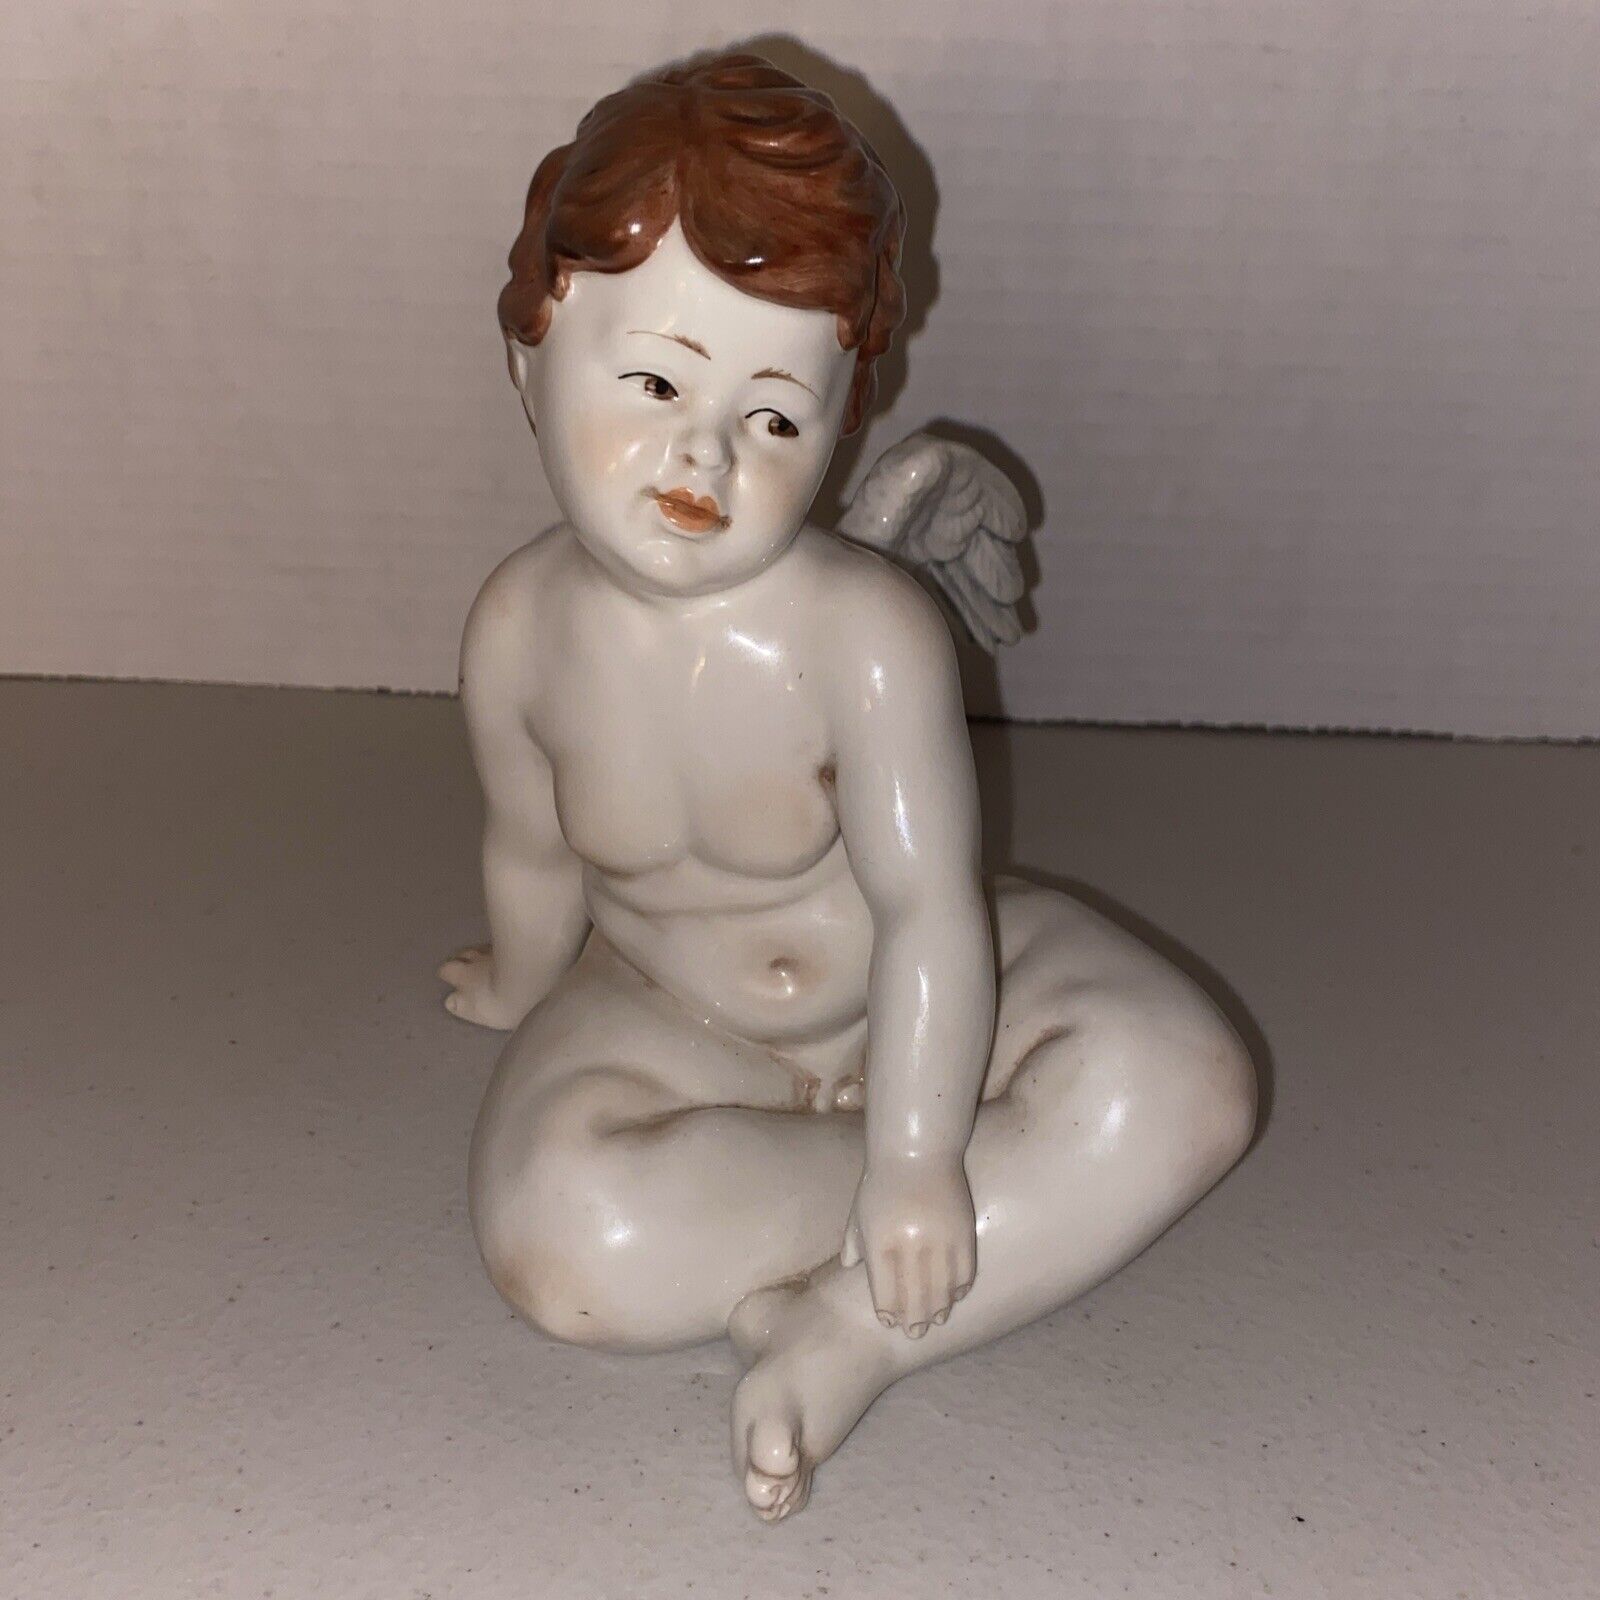 Stunning Vintage Cherub Figurine by Grupo Galos Made in Spain 8720 6” Tall & 5”W